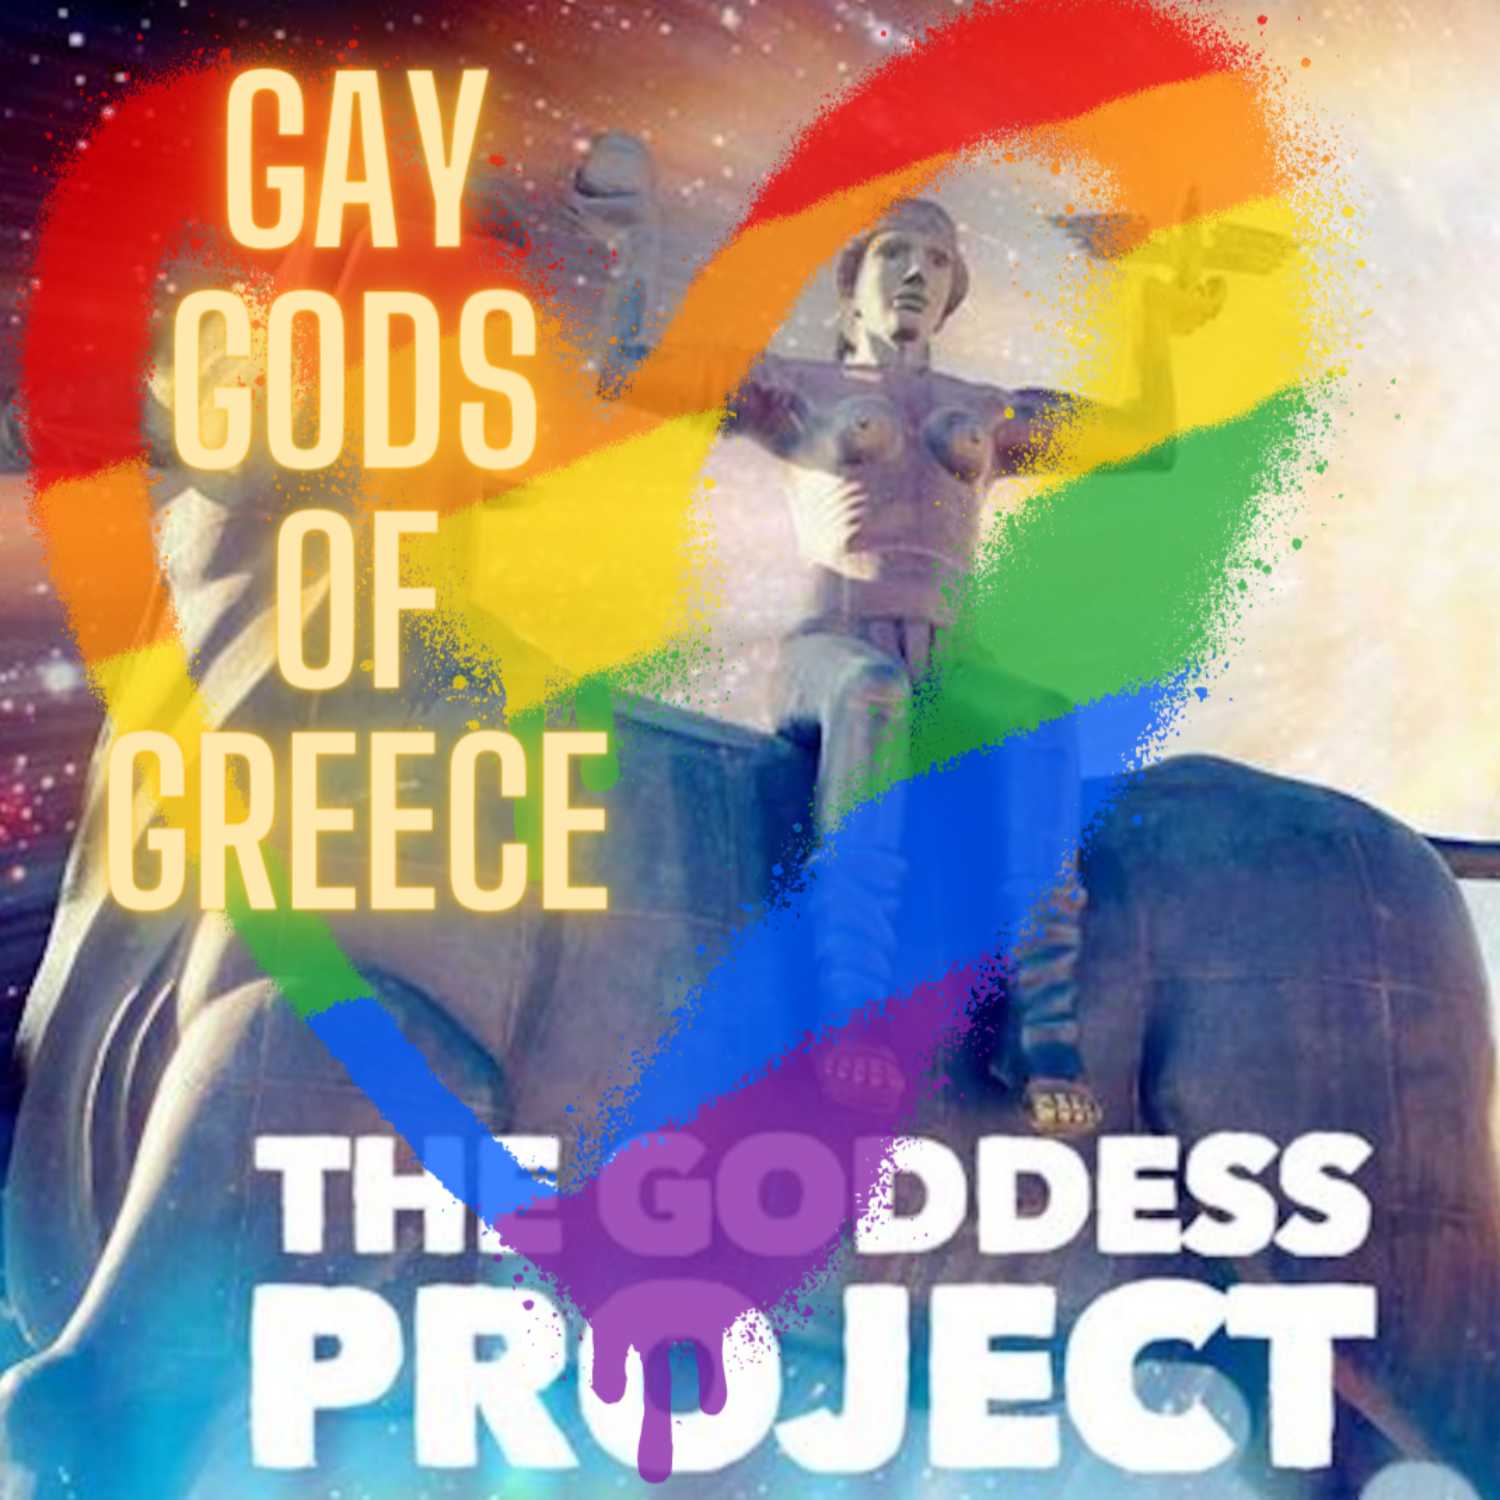 GAY GODS OF GREECE - Poseidon and Pelops